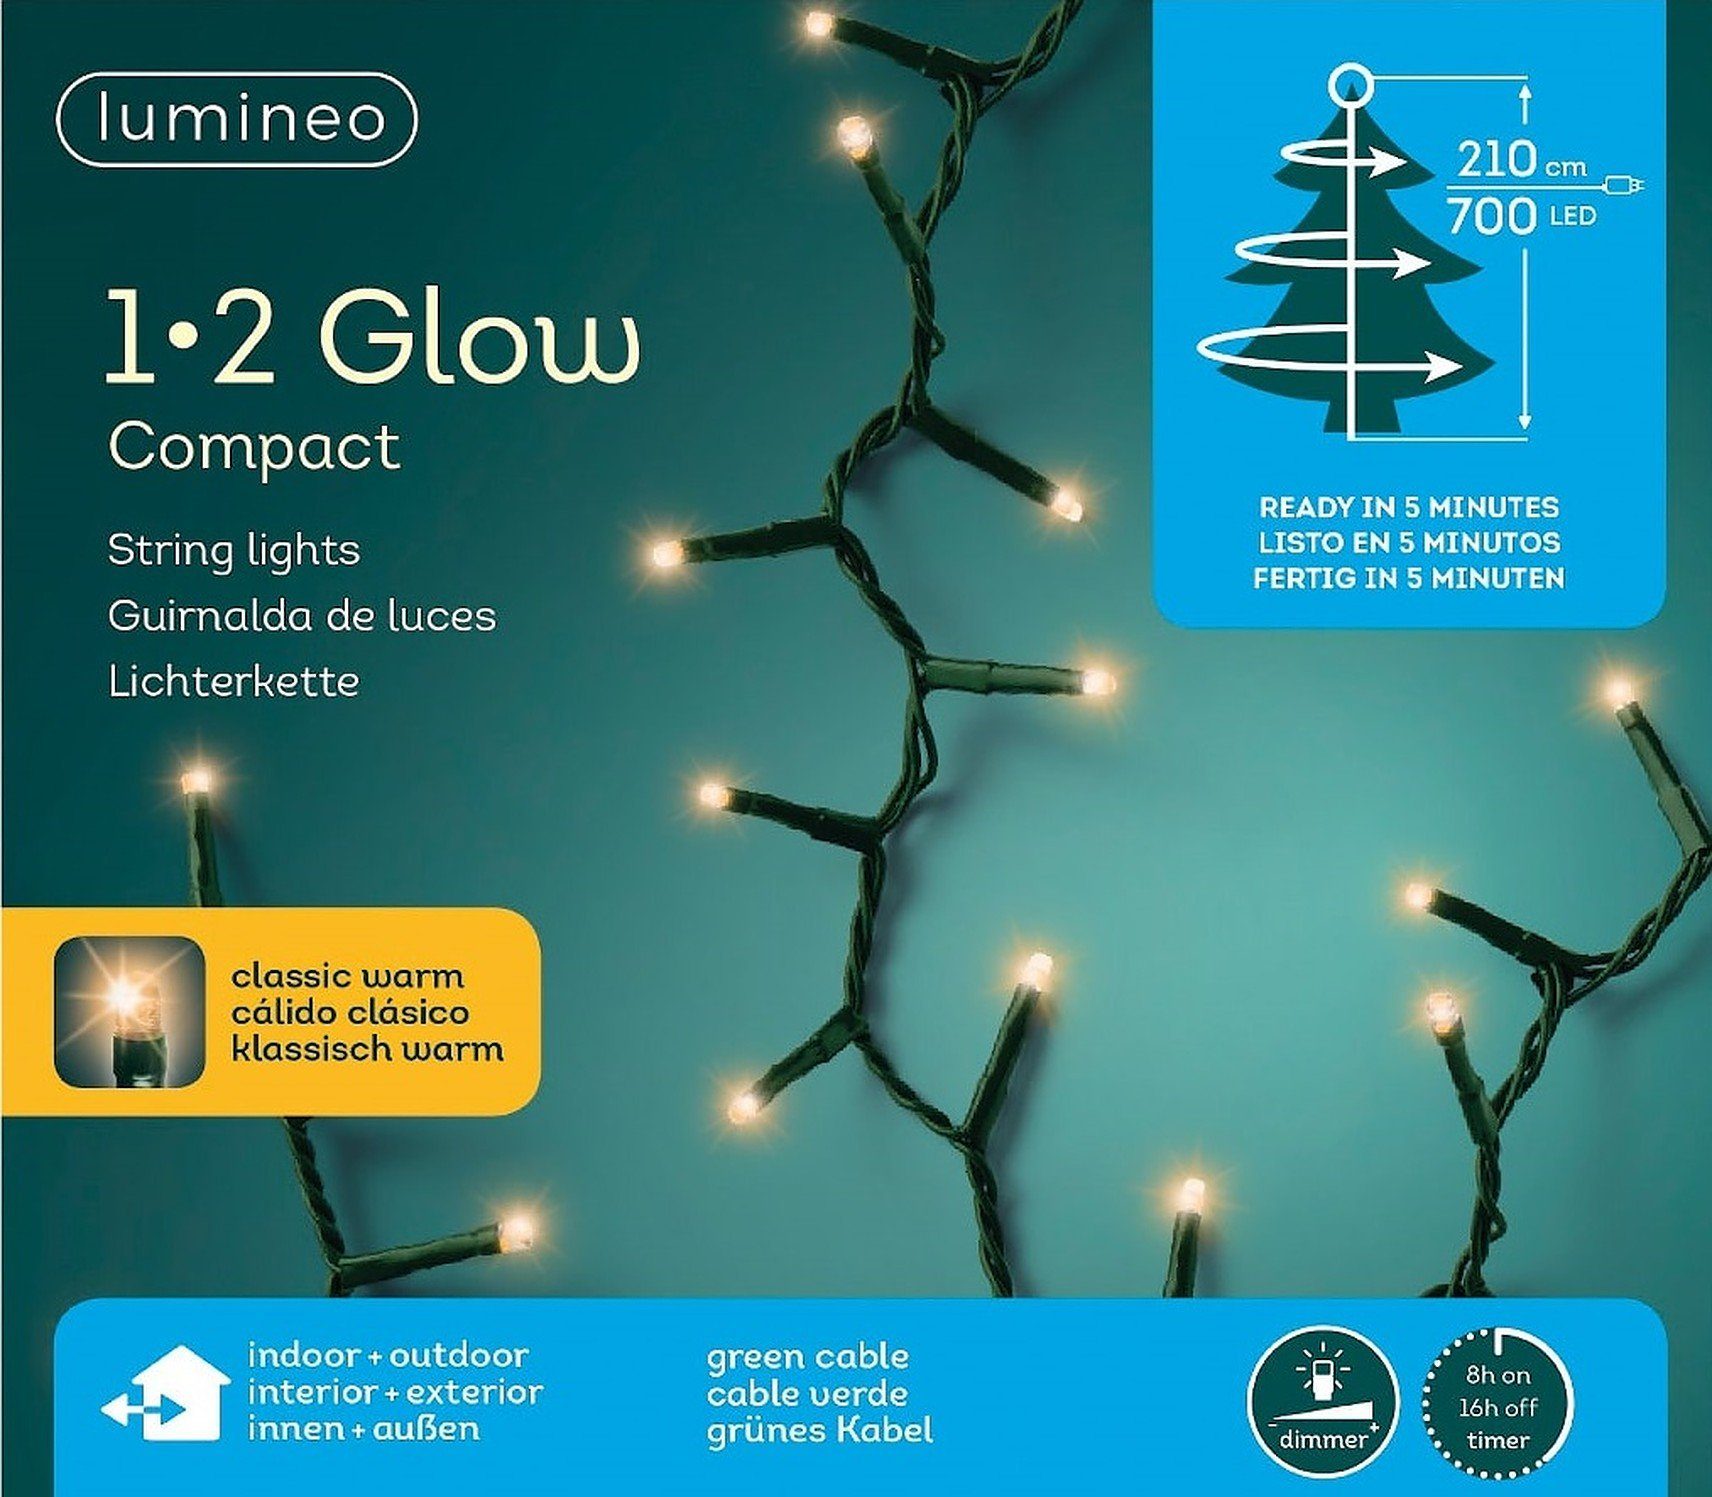 Lichterkette Lumineo Glow grün, Indoor, IP44-Schutz 700LED warm, Timer, klassisch 2,1m Dimmbar, Compact 1-2 LED-Lichterkette Lumineo Outdoor,